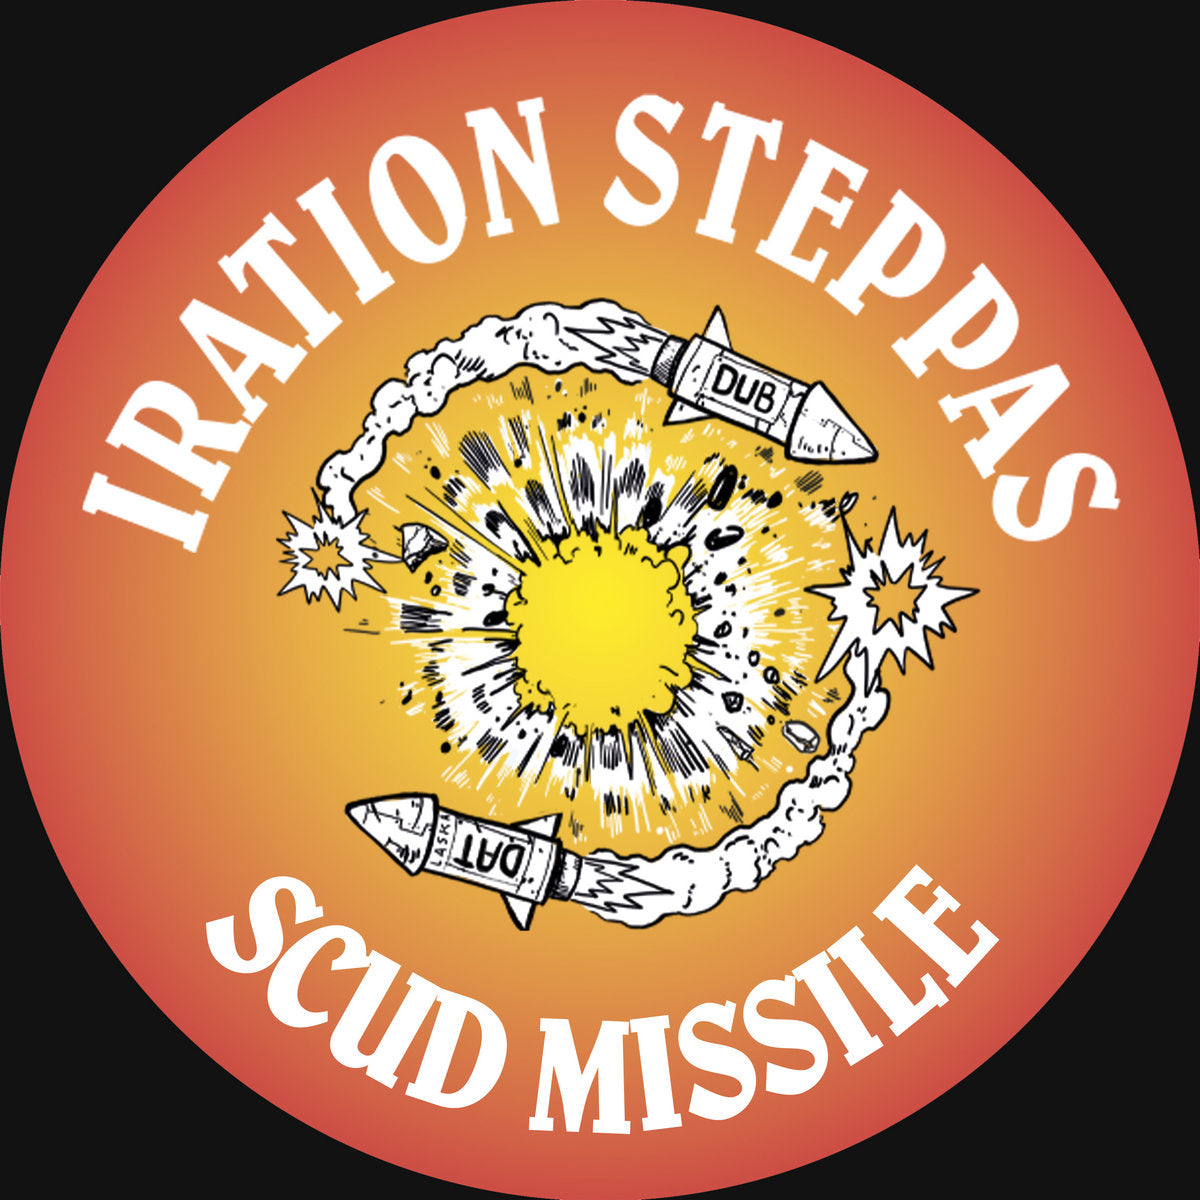 Iration Steppas - Scud Missile